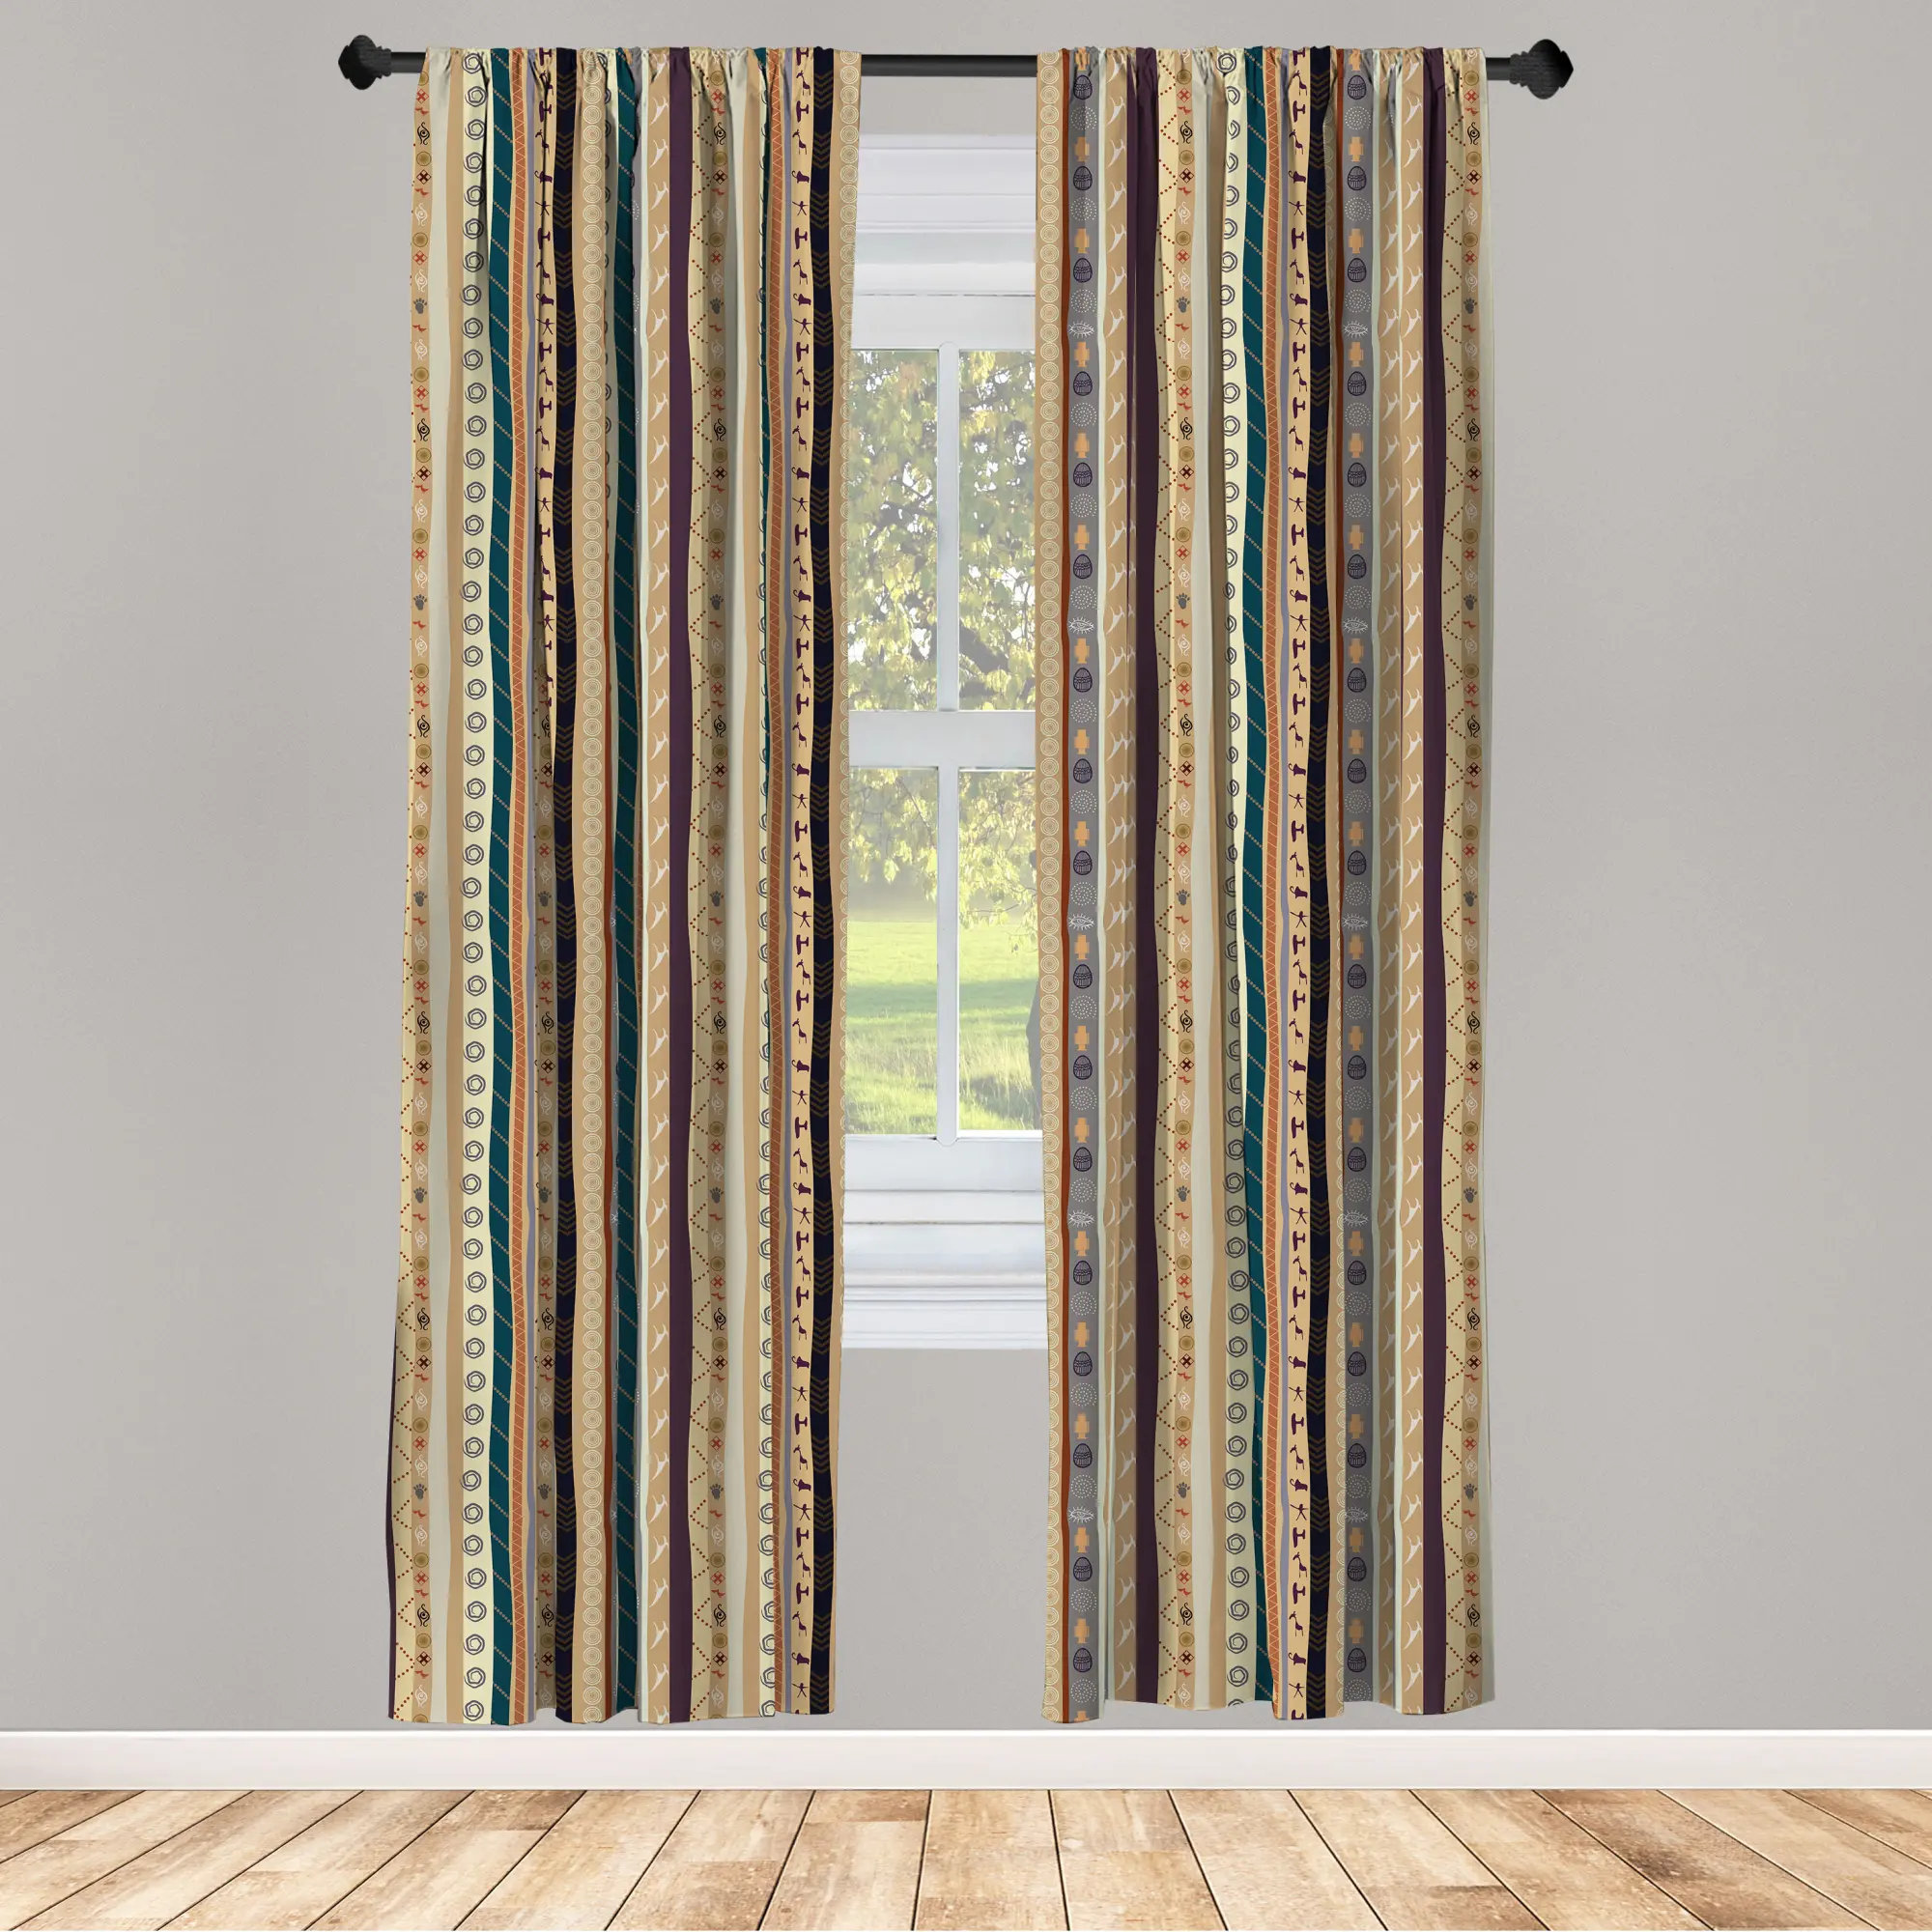 Tribal Striped Semi-Sheer Rod Pocket Curtain Panels (Set of 2) East Urban Home Size per Panel: 28 x 63